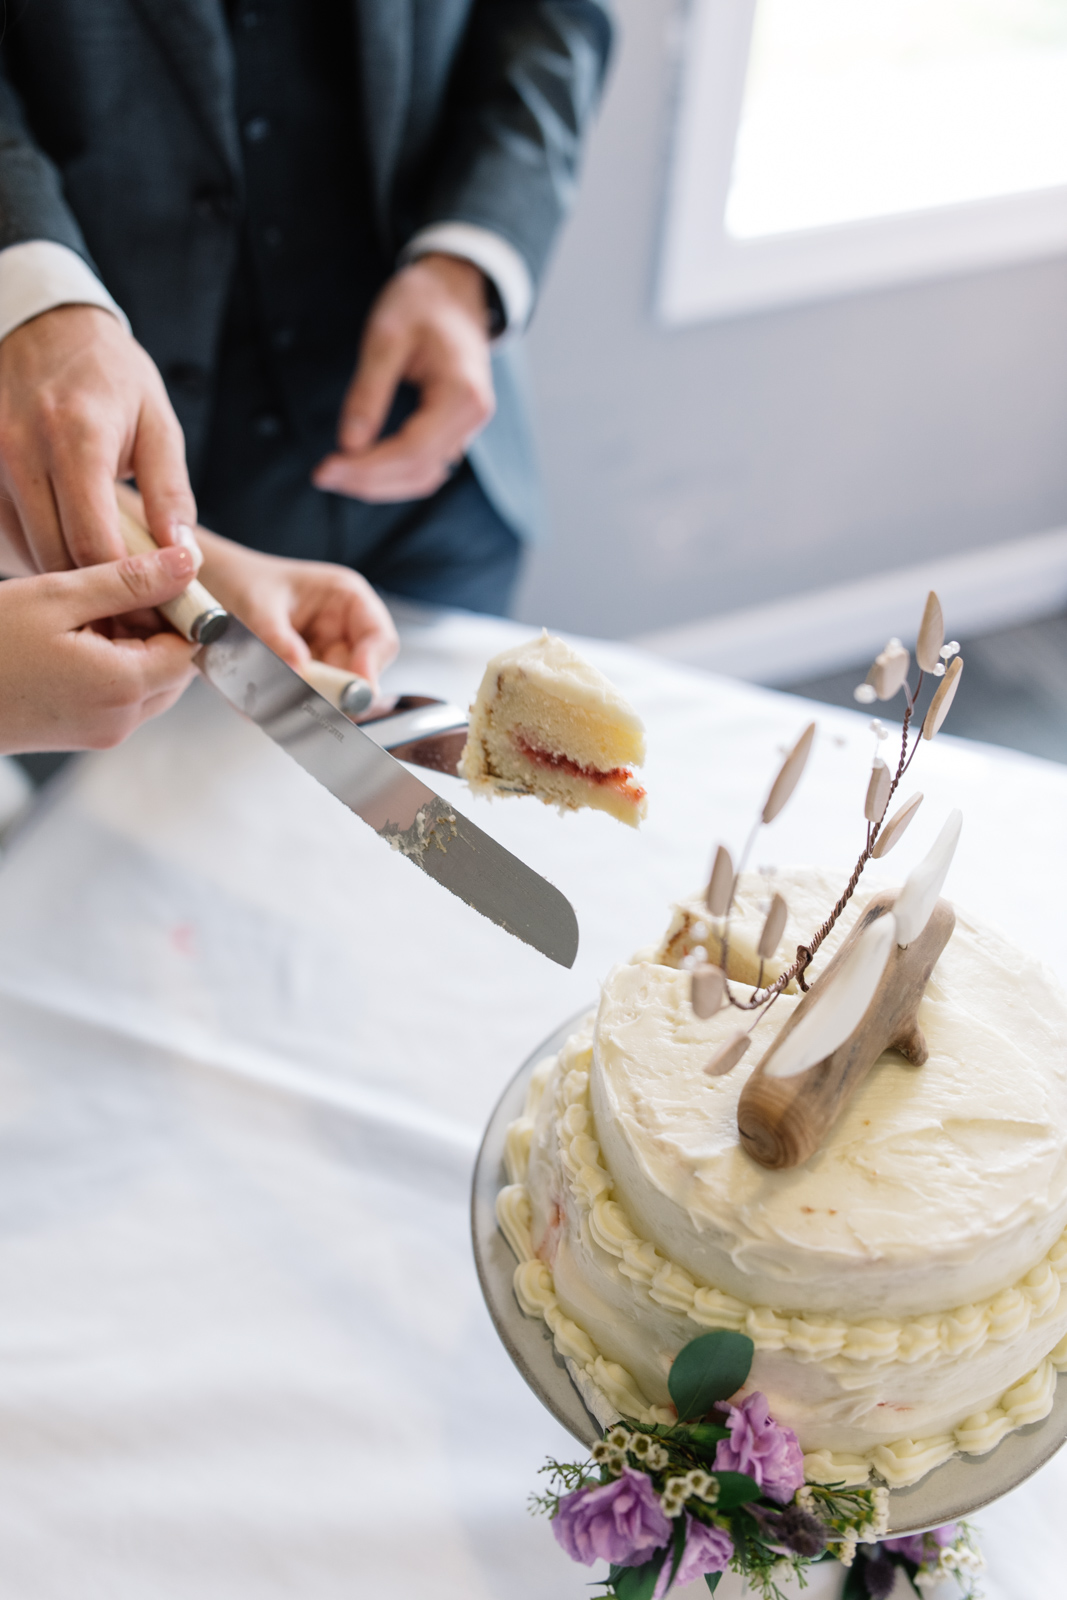 slice of wedding cake